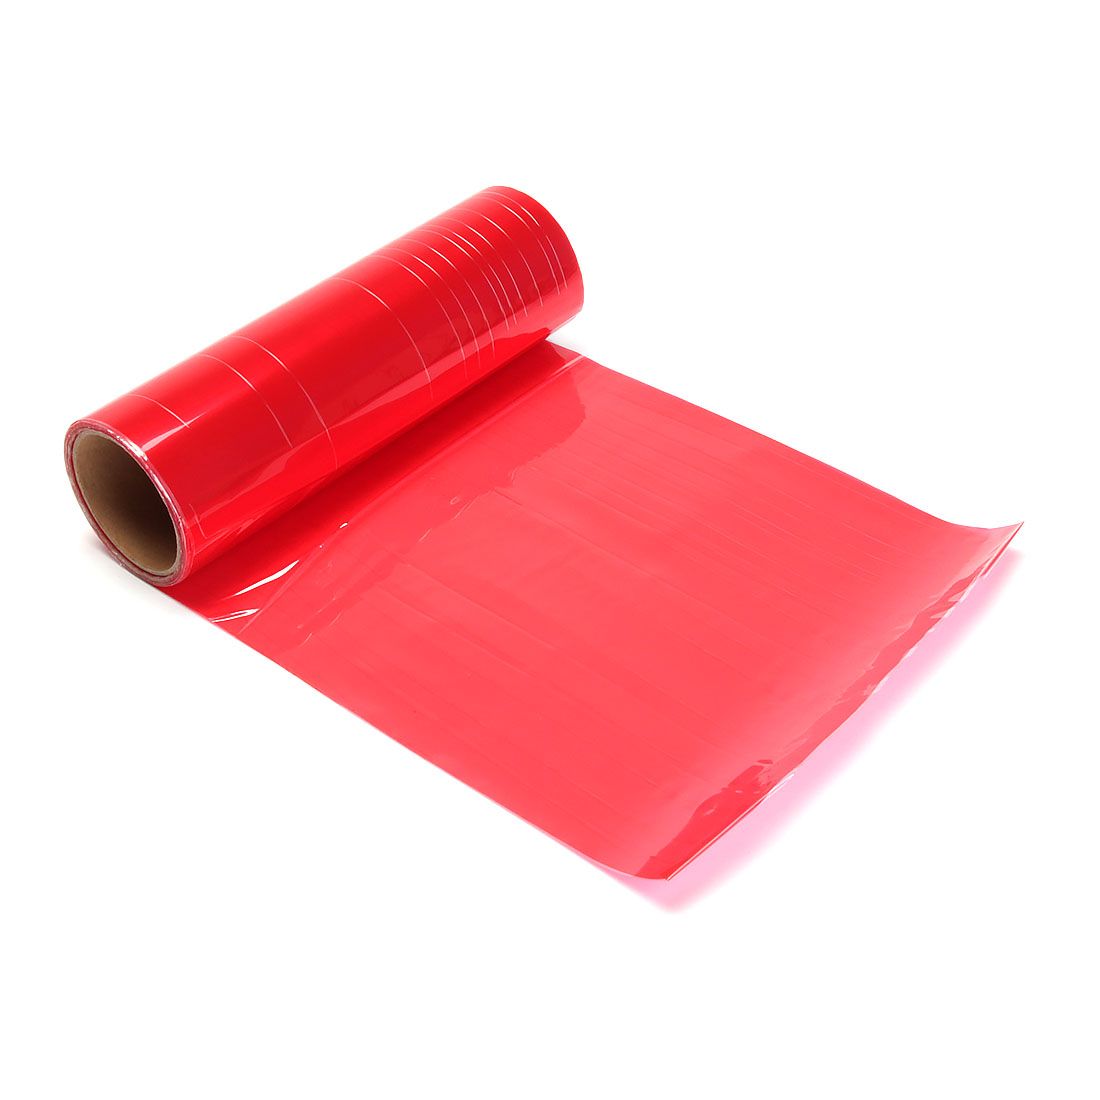 Пленка для фар защитная, тонировочная, автомобильная, глянцевая - 30см х 1п.м., цвет: красный